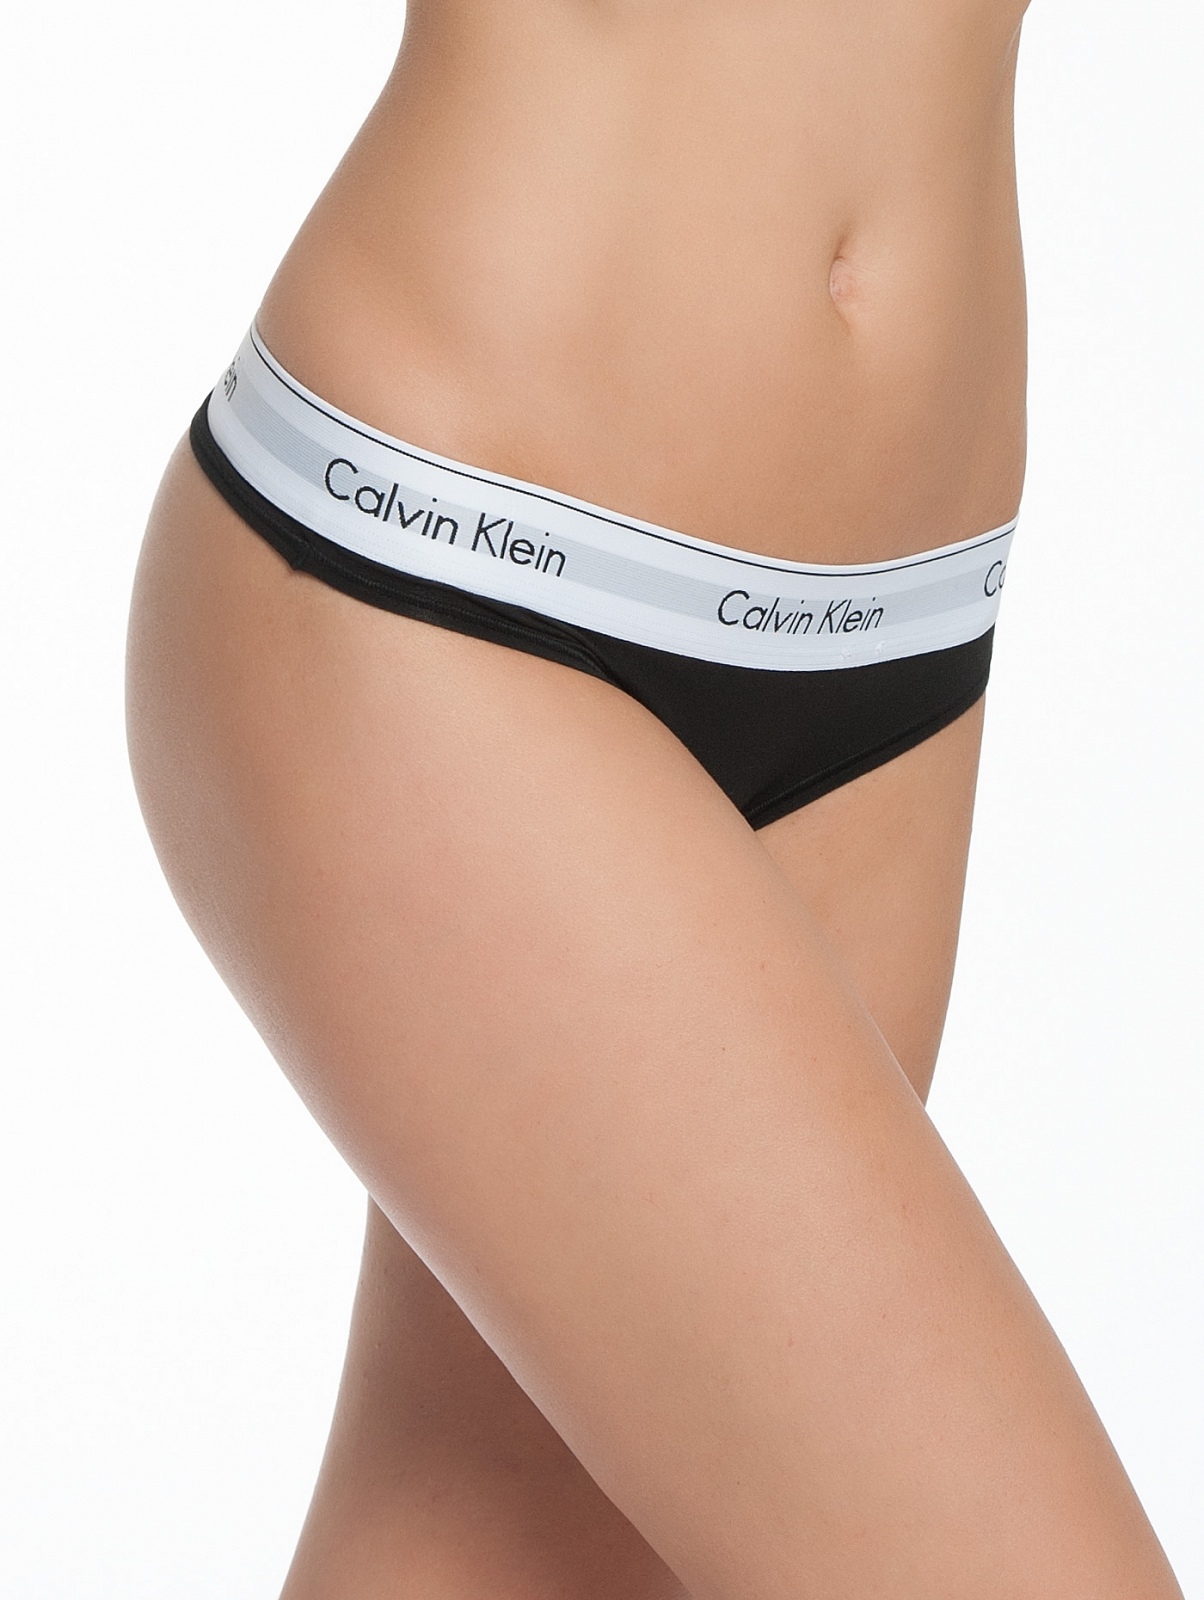 Krásná dámská tanga značky Calvin Klein